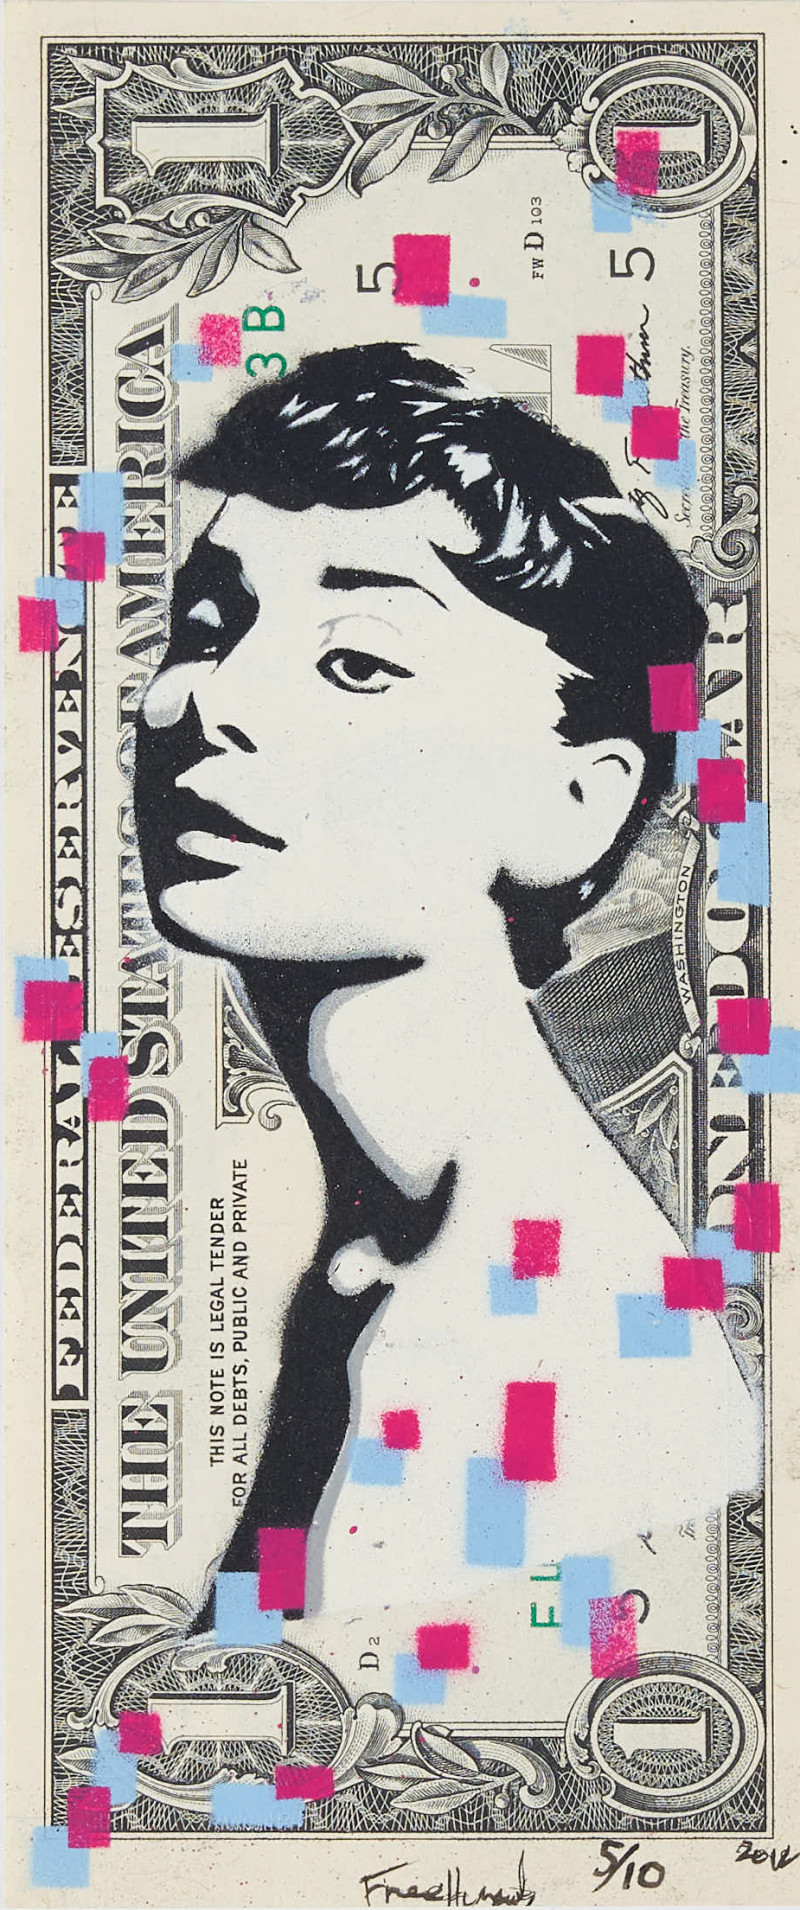 Free Humanity - Audrey dollar bill